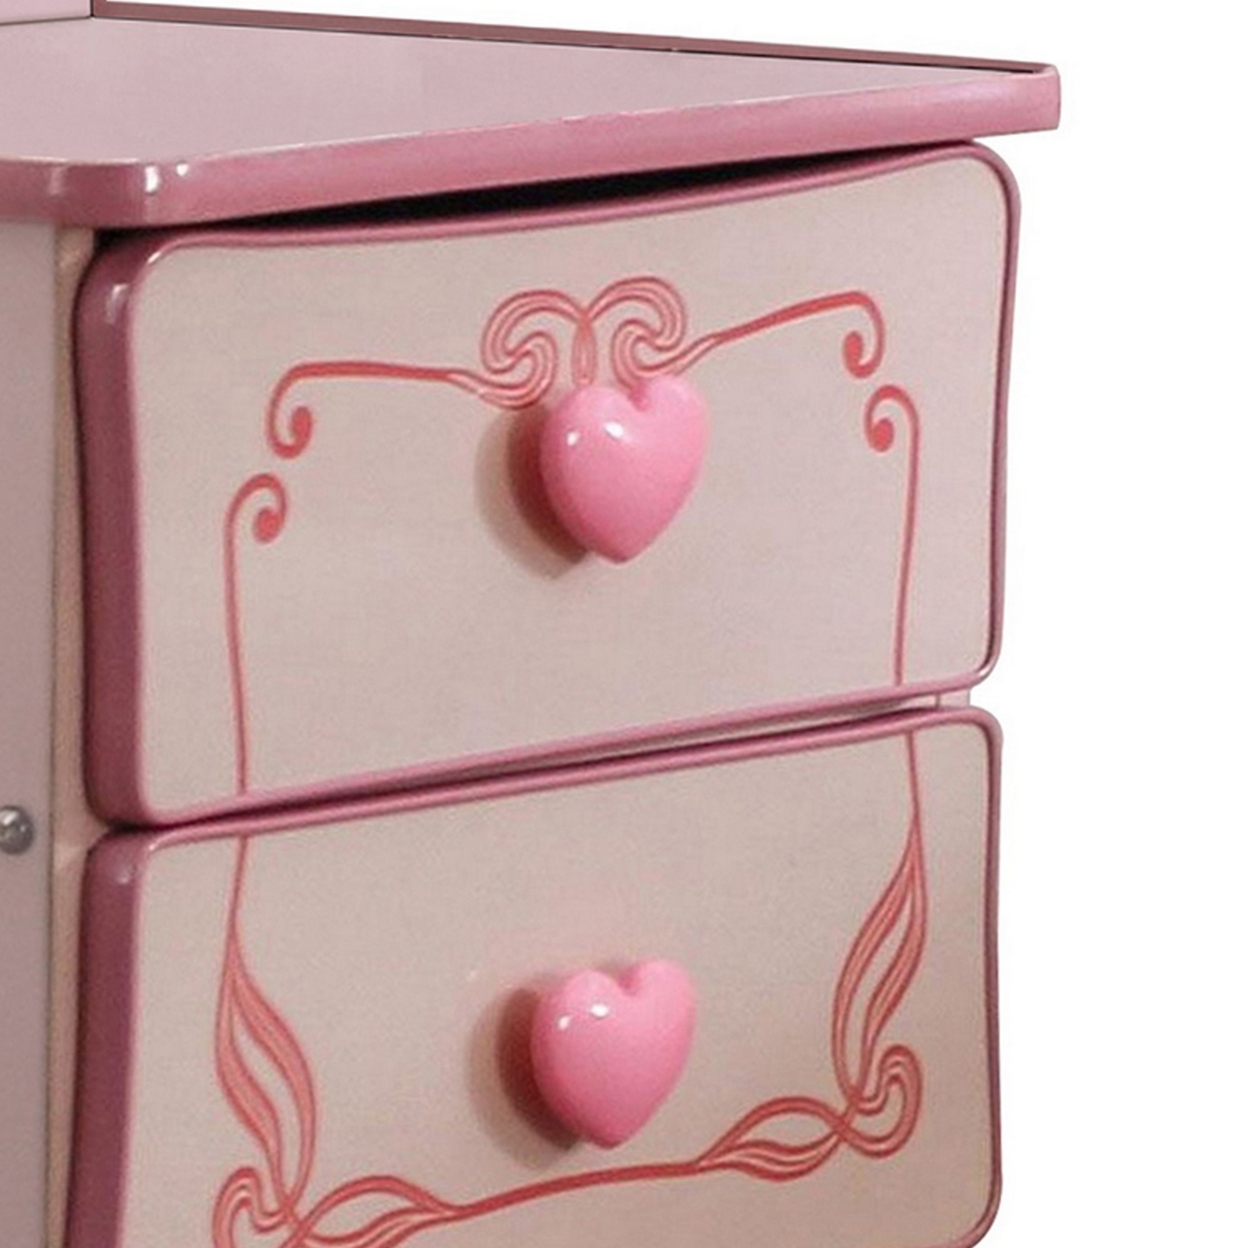 2 Drawer Wooden Nightstand With Heart Knob Pulls, Pink- Saltoro Sherpi